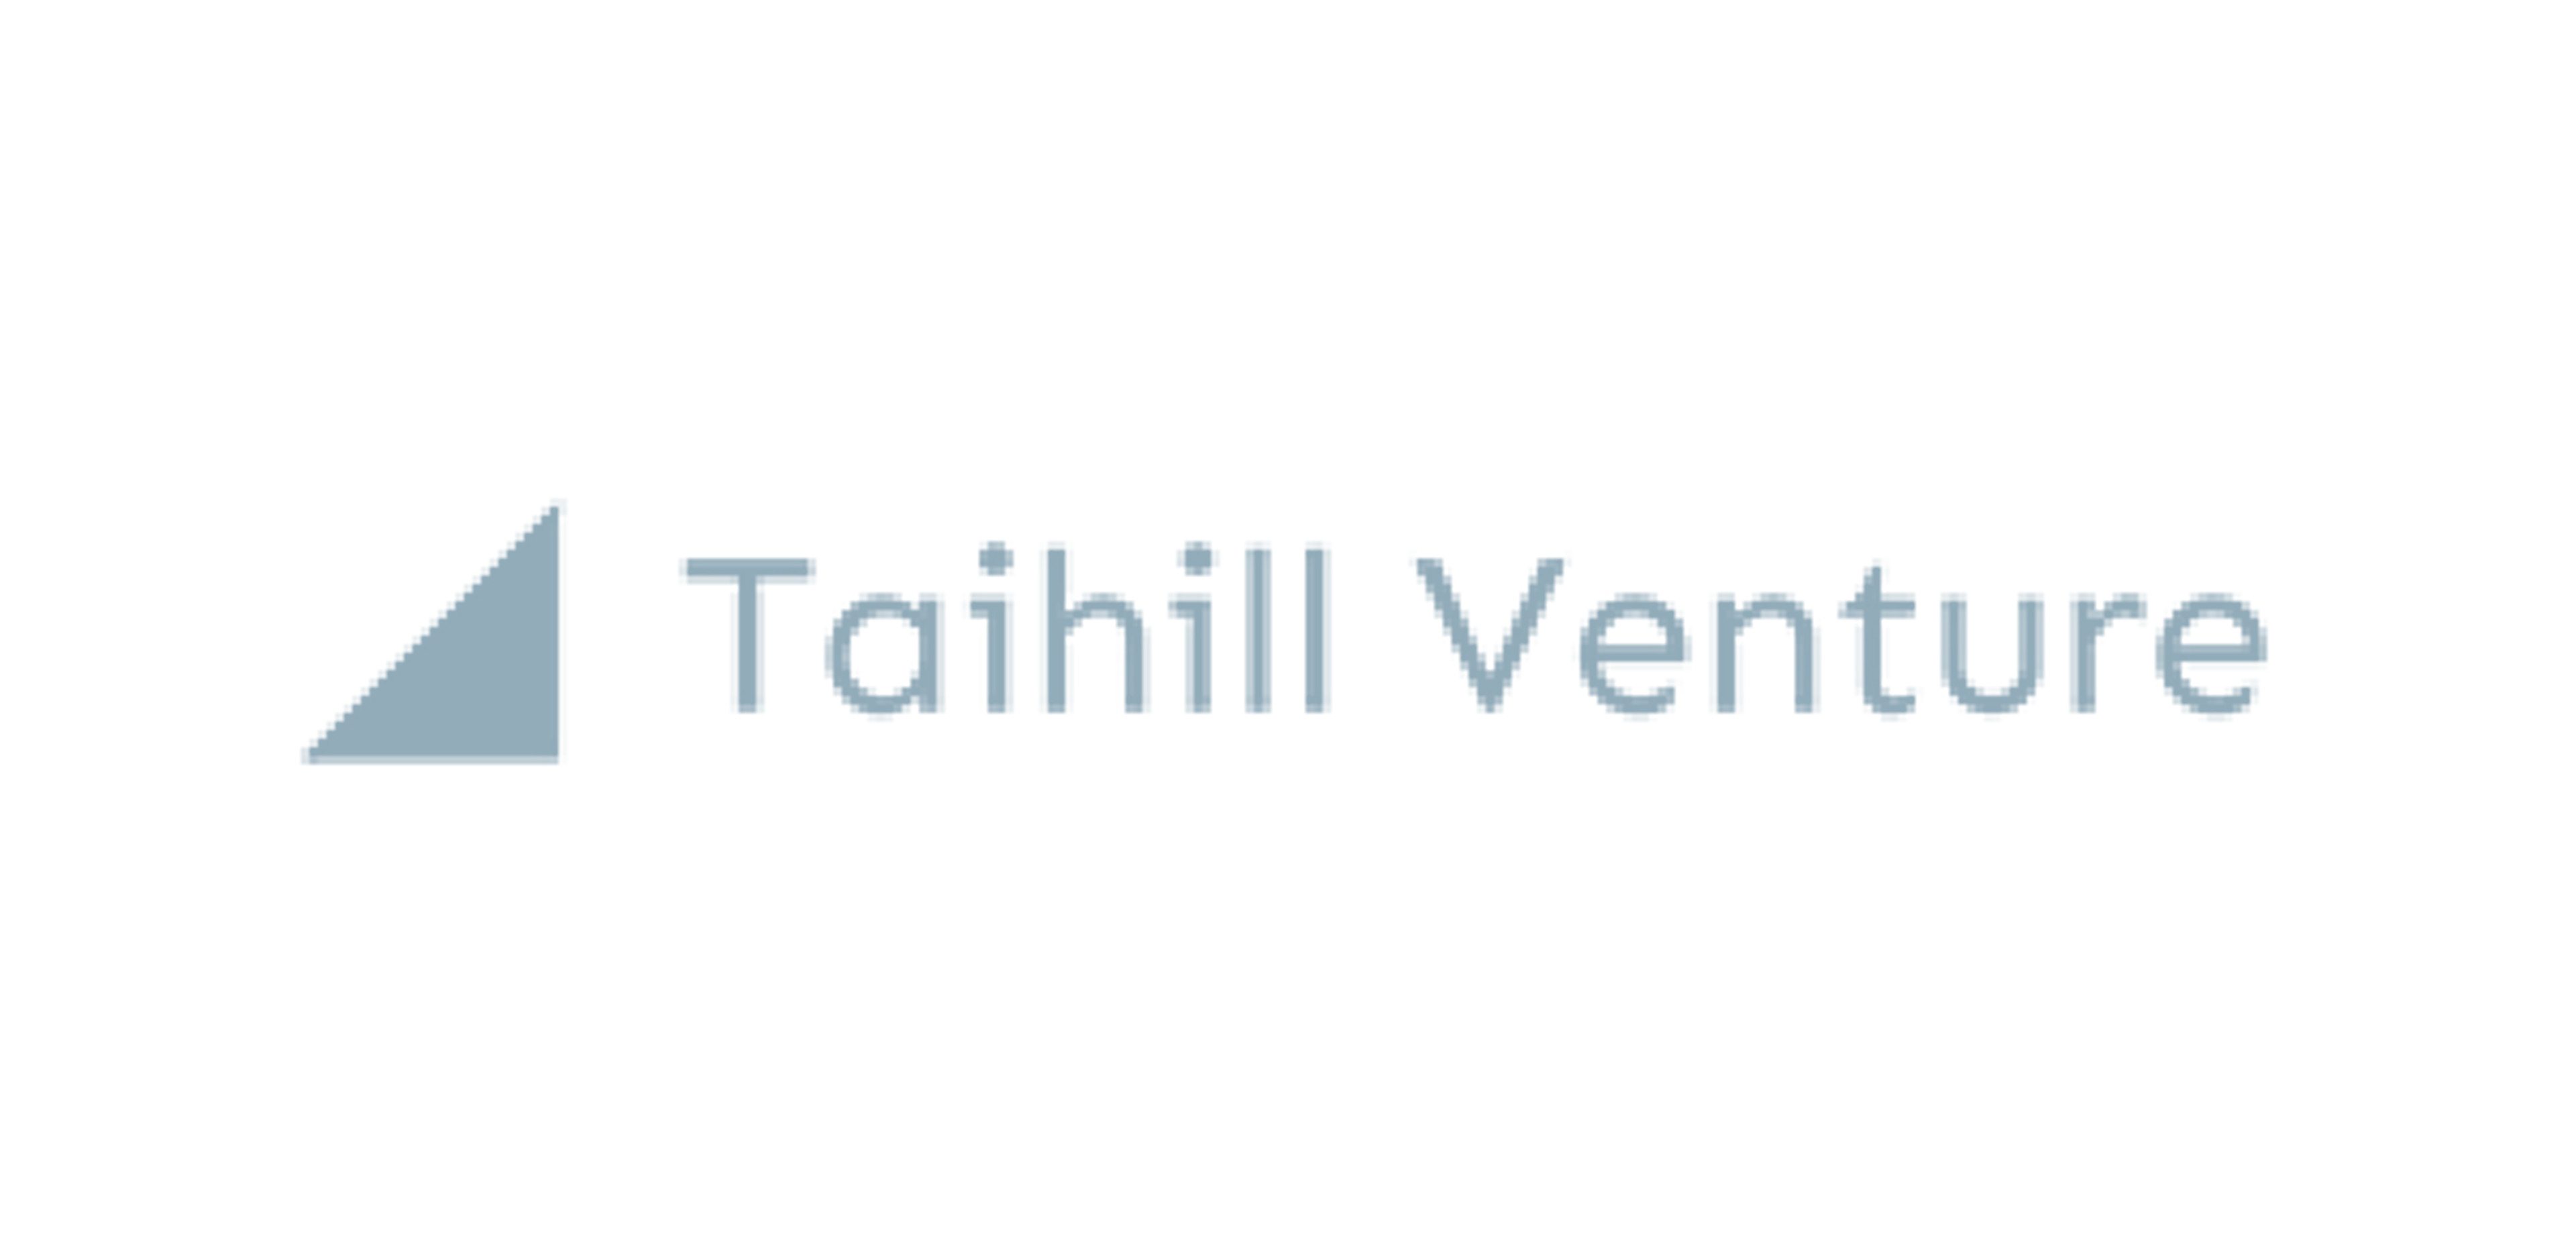 Taihill Venture